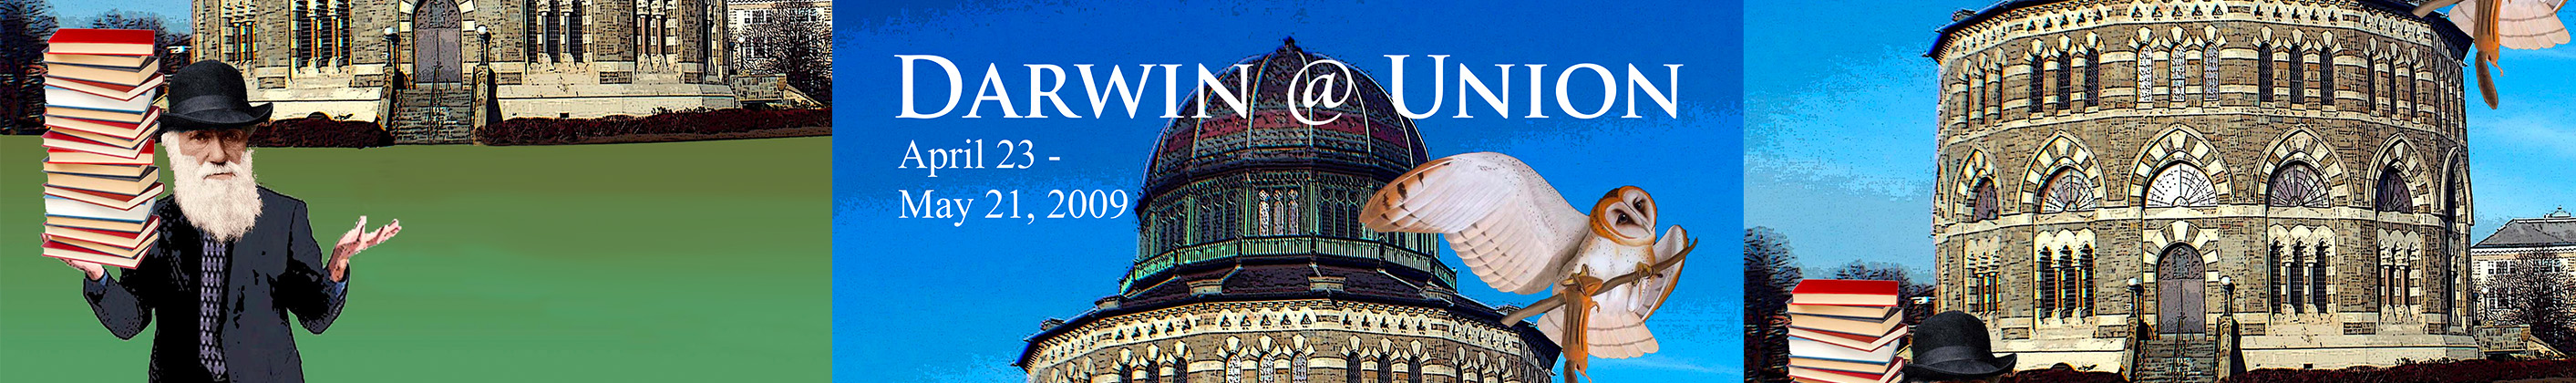 Darwin @ Union banner